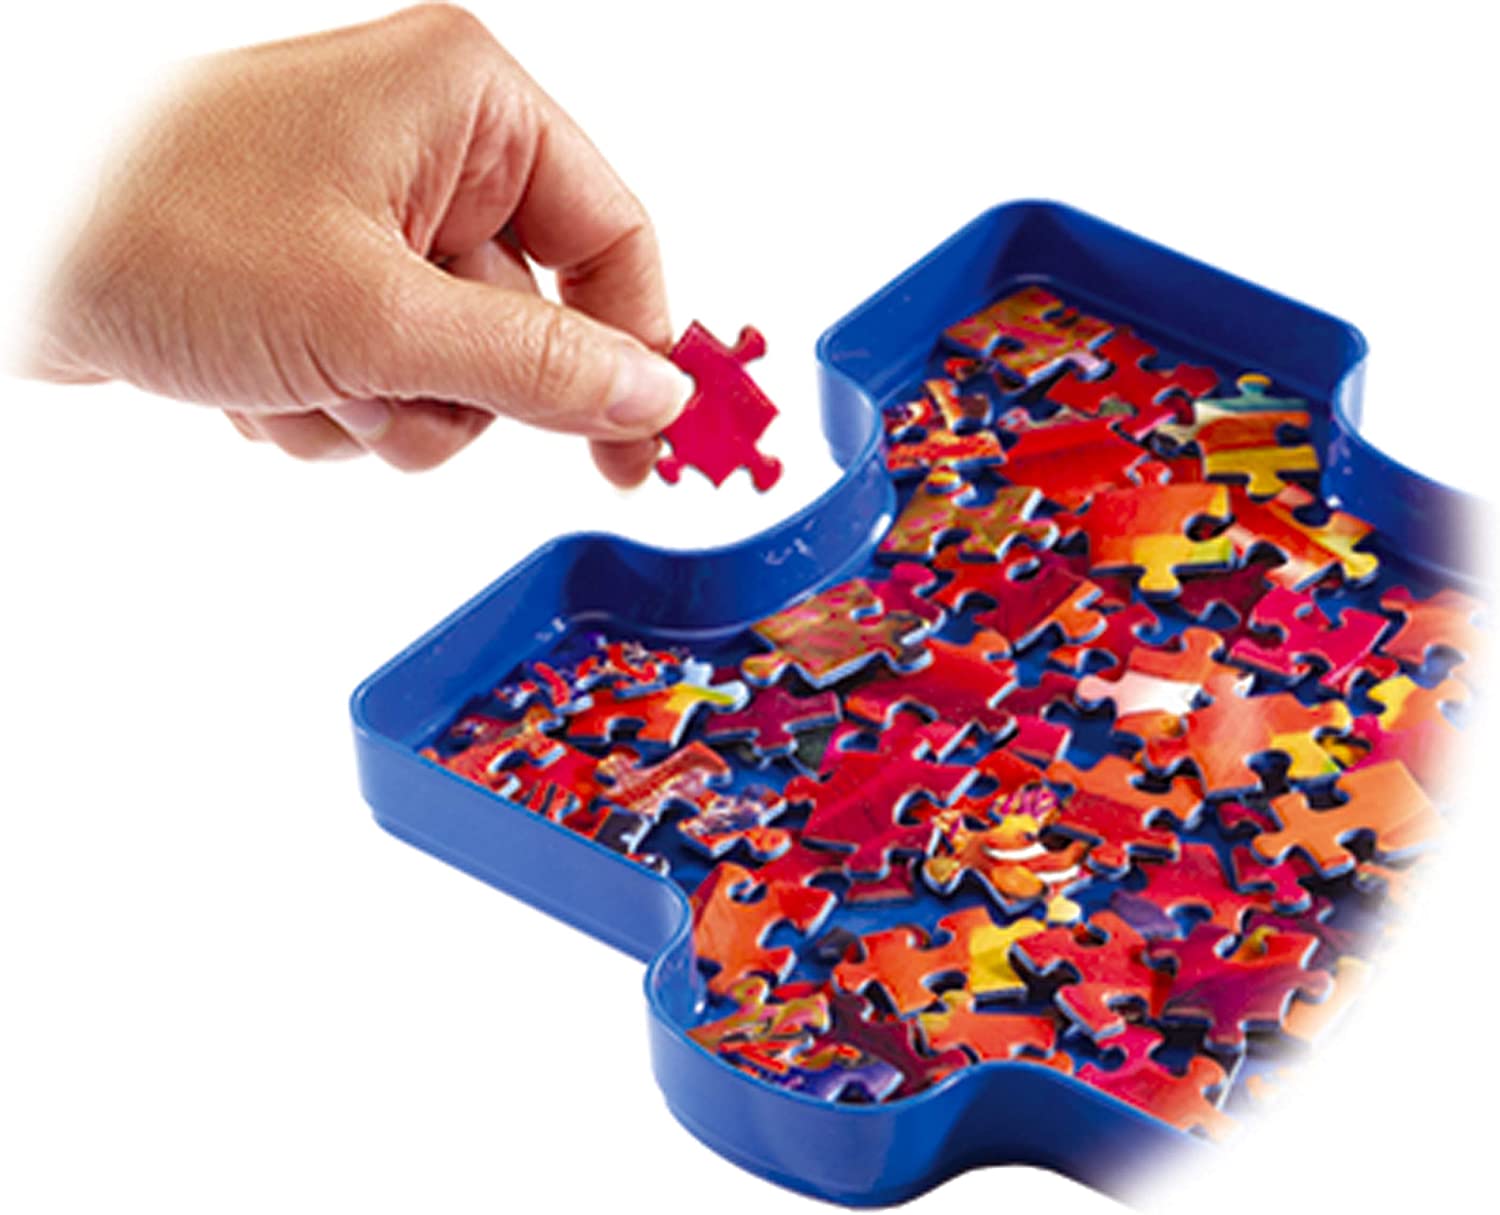 Ravensburger Sort Your Puzzle! Storage Box Jigsaw Puzzle (6 Piece)